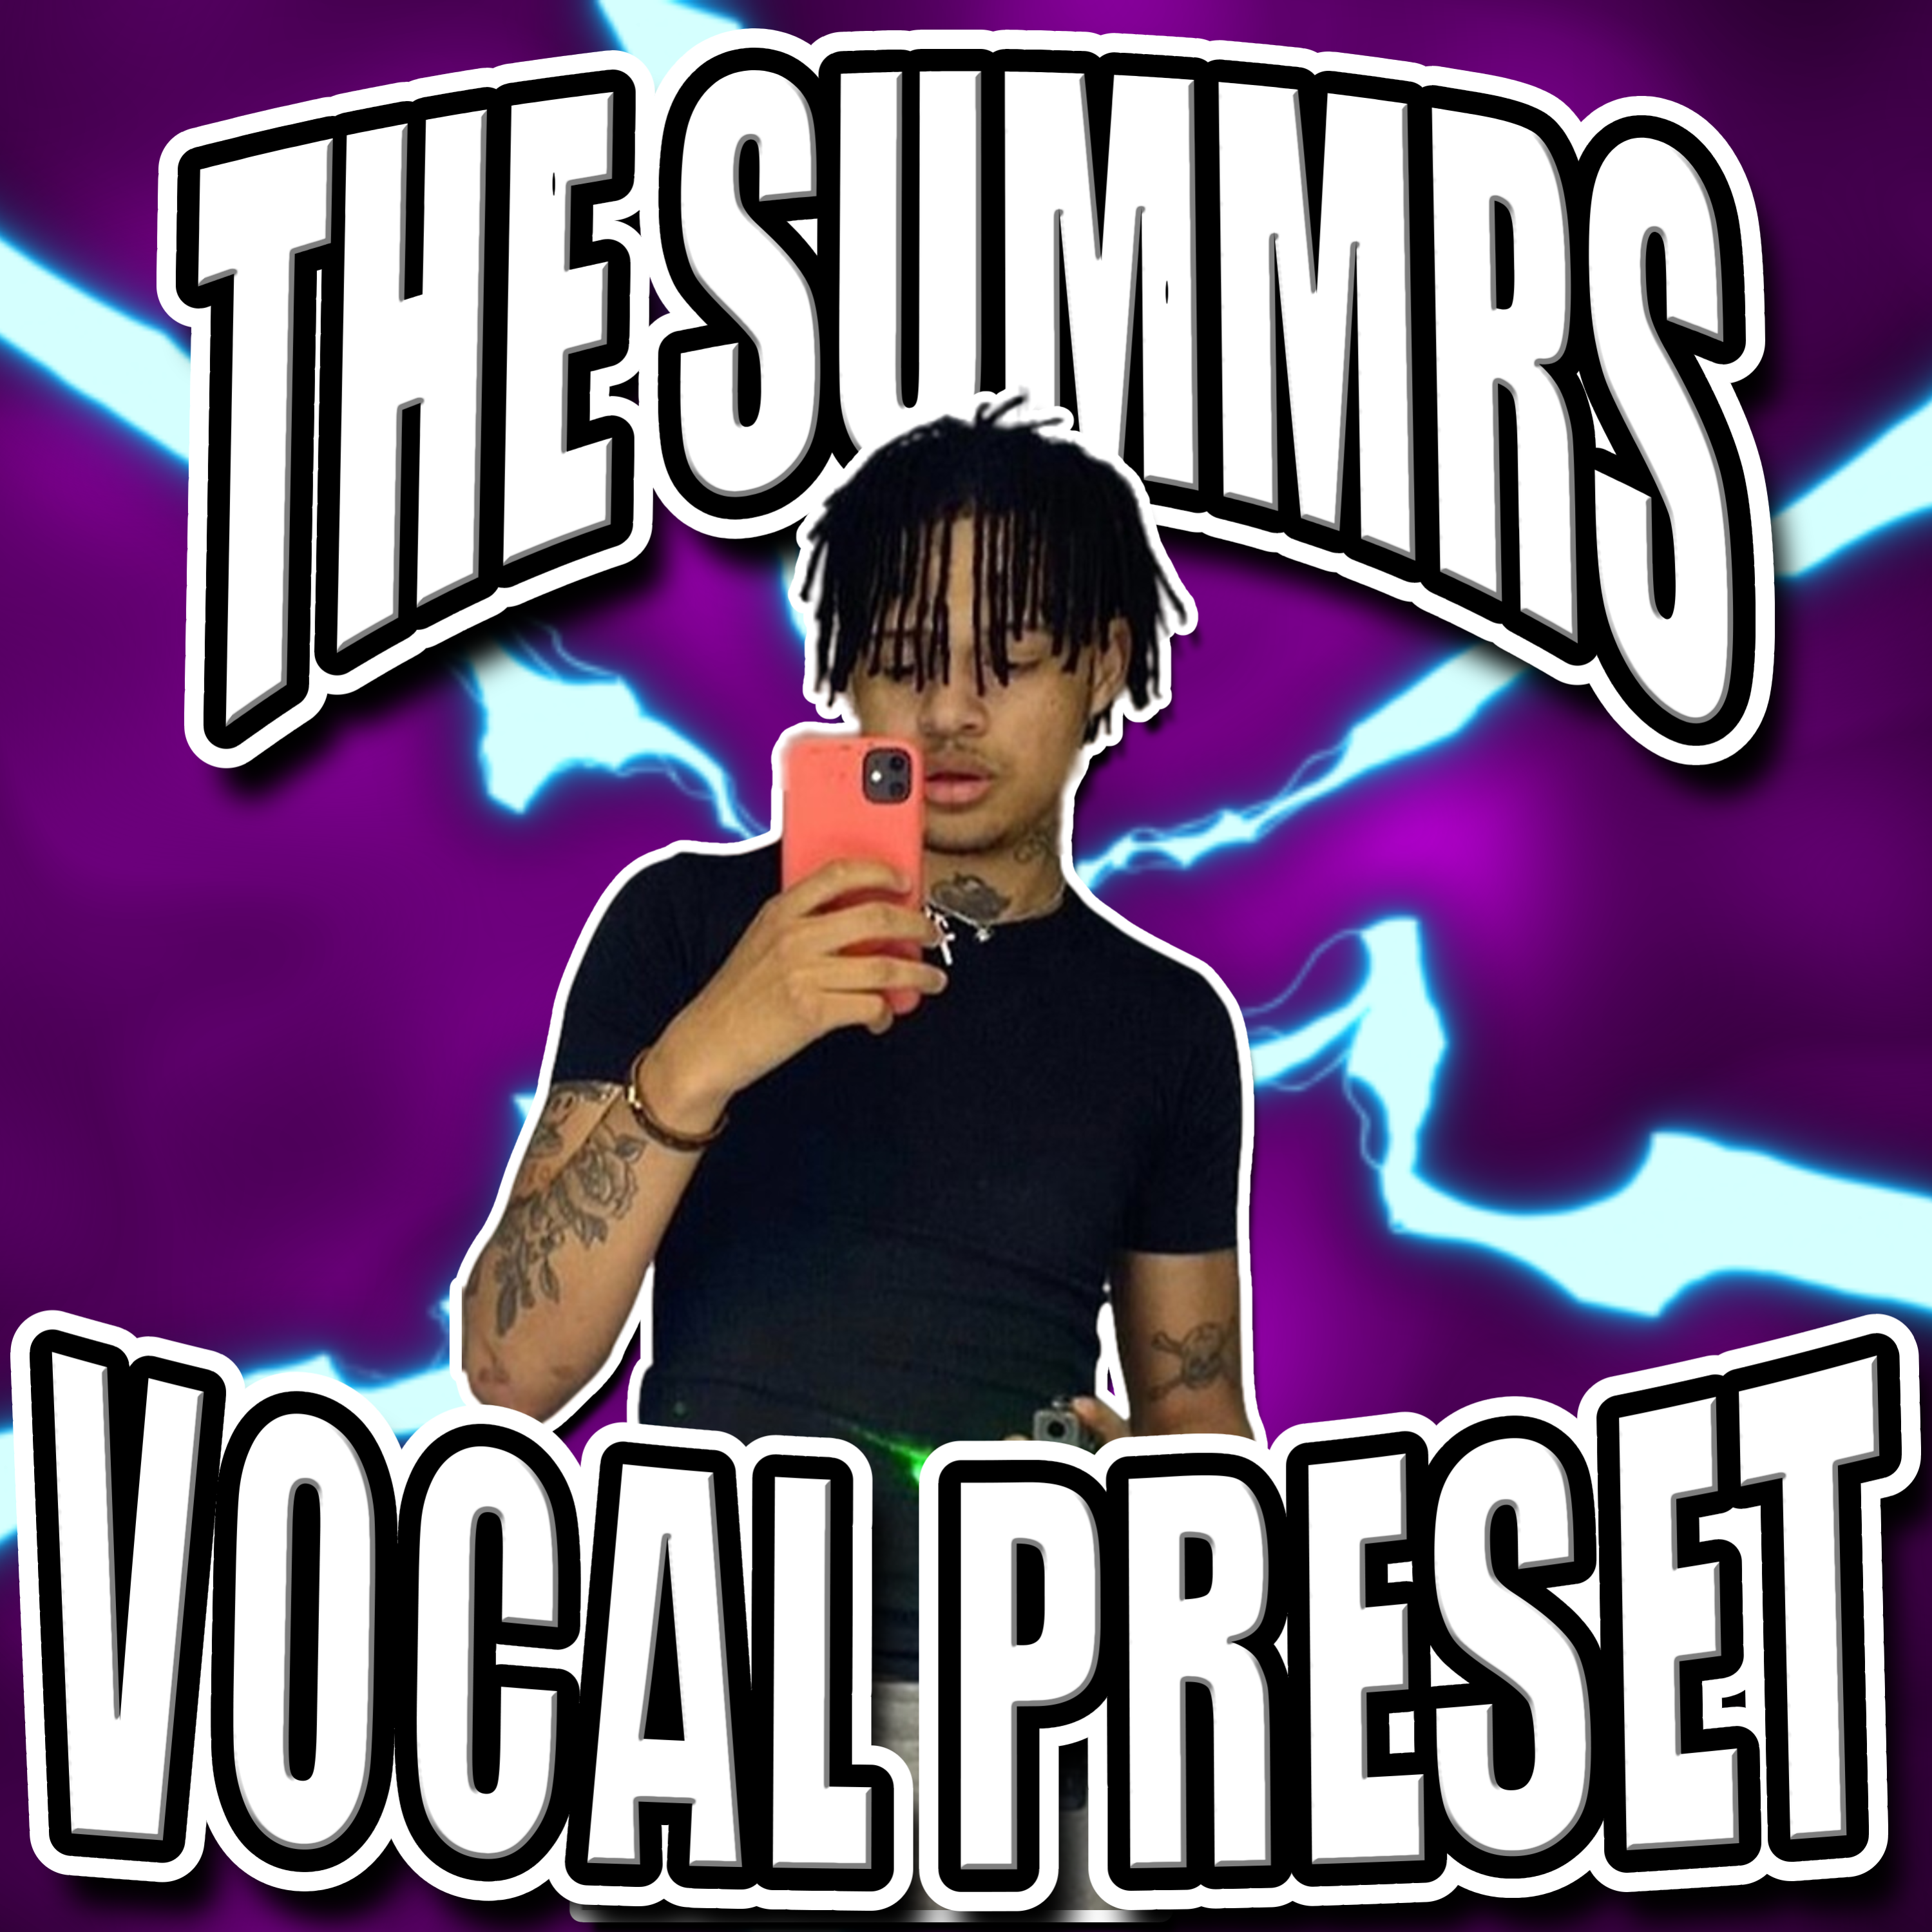 Summrs Vocal Preset